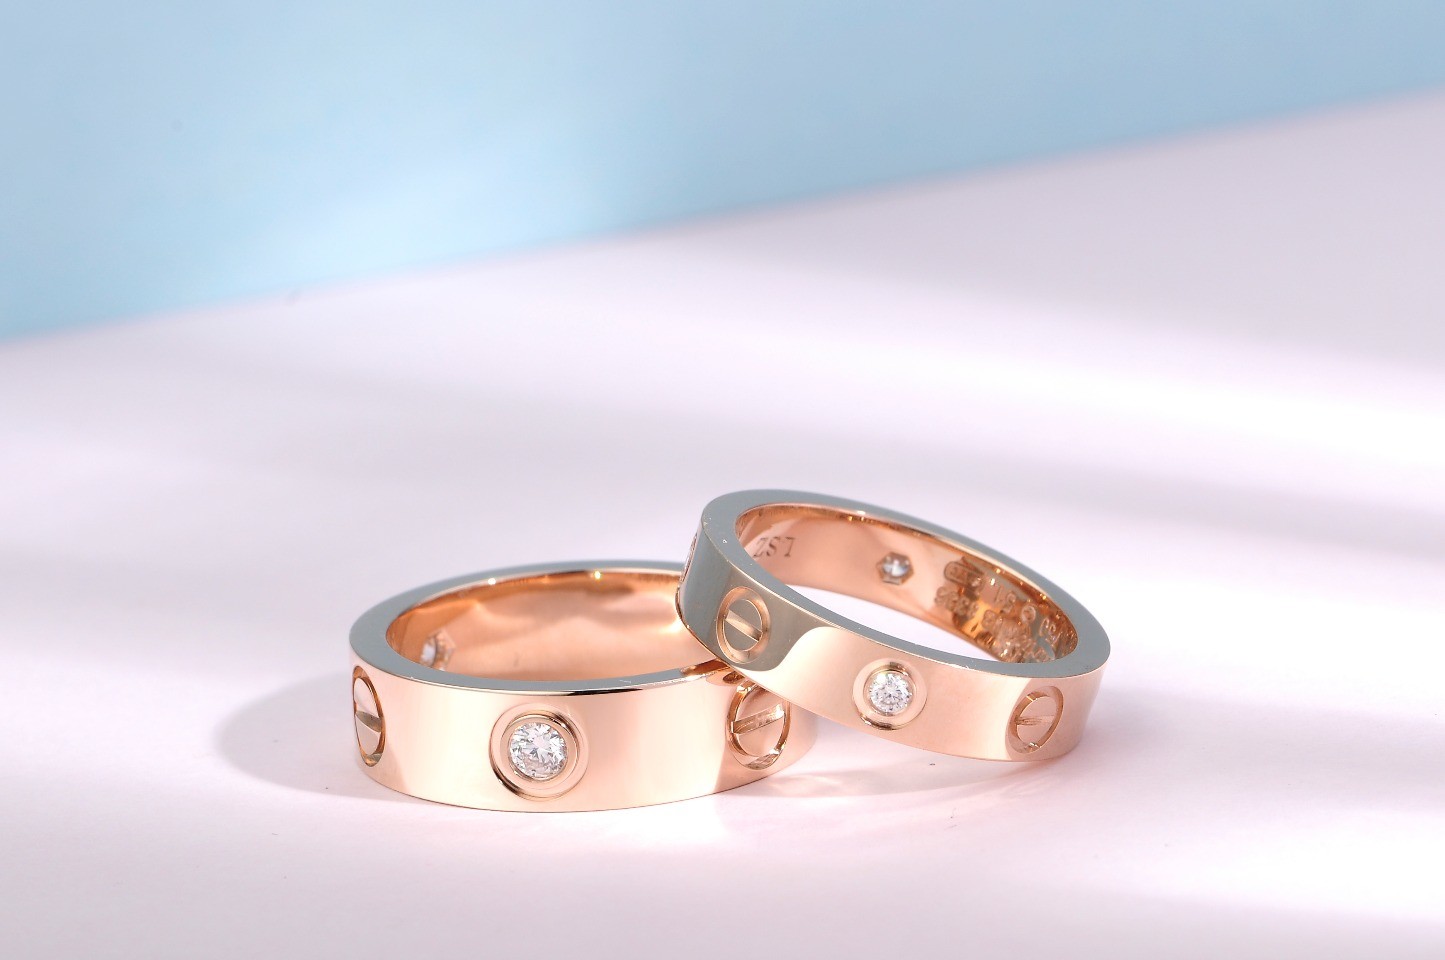 0.24ct Hk Setting Jewelry Diamond Carat Vs2 Stone Clarity Love Rings 18k Rose Gold